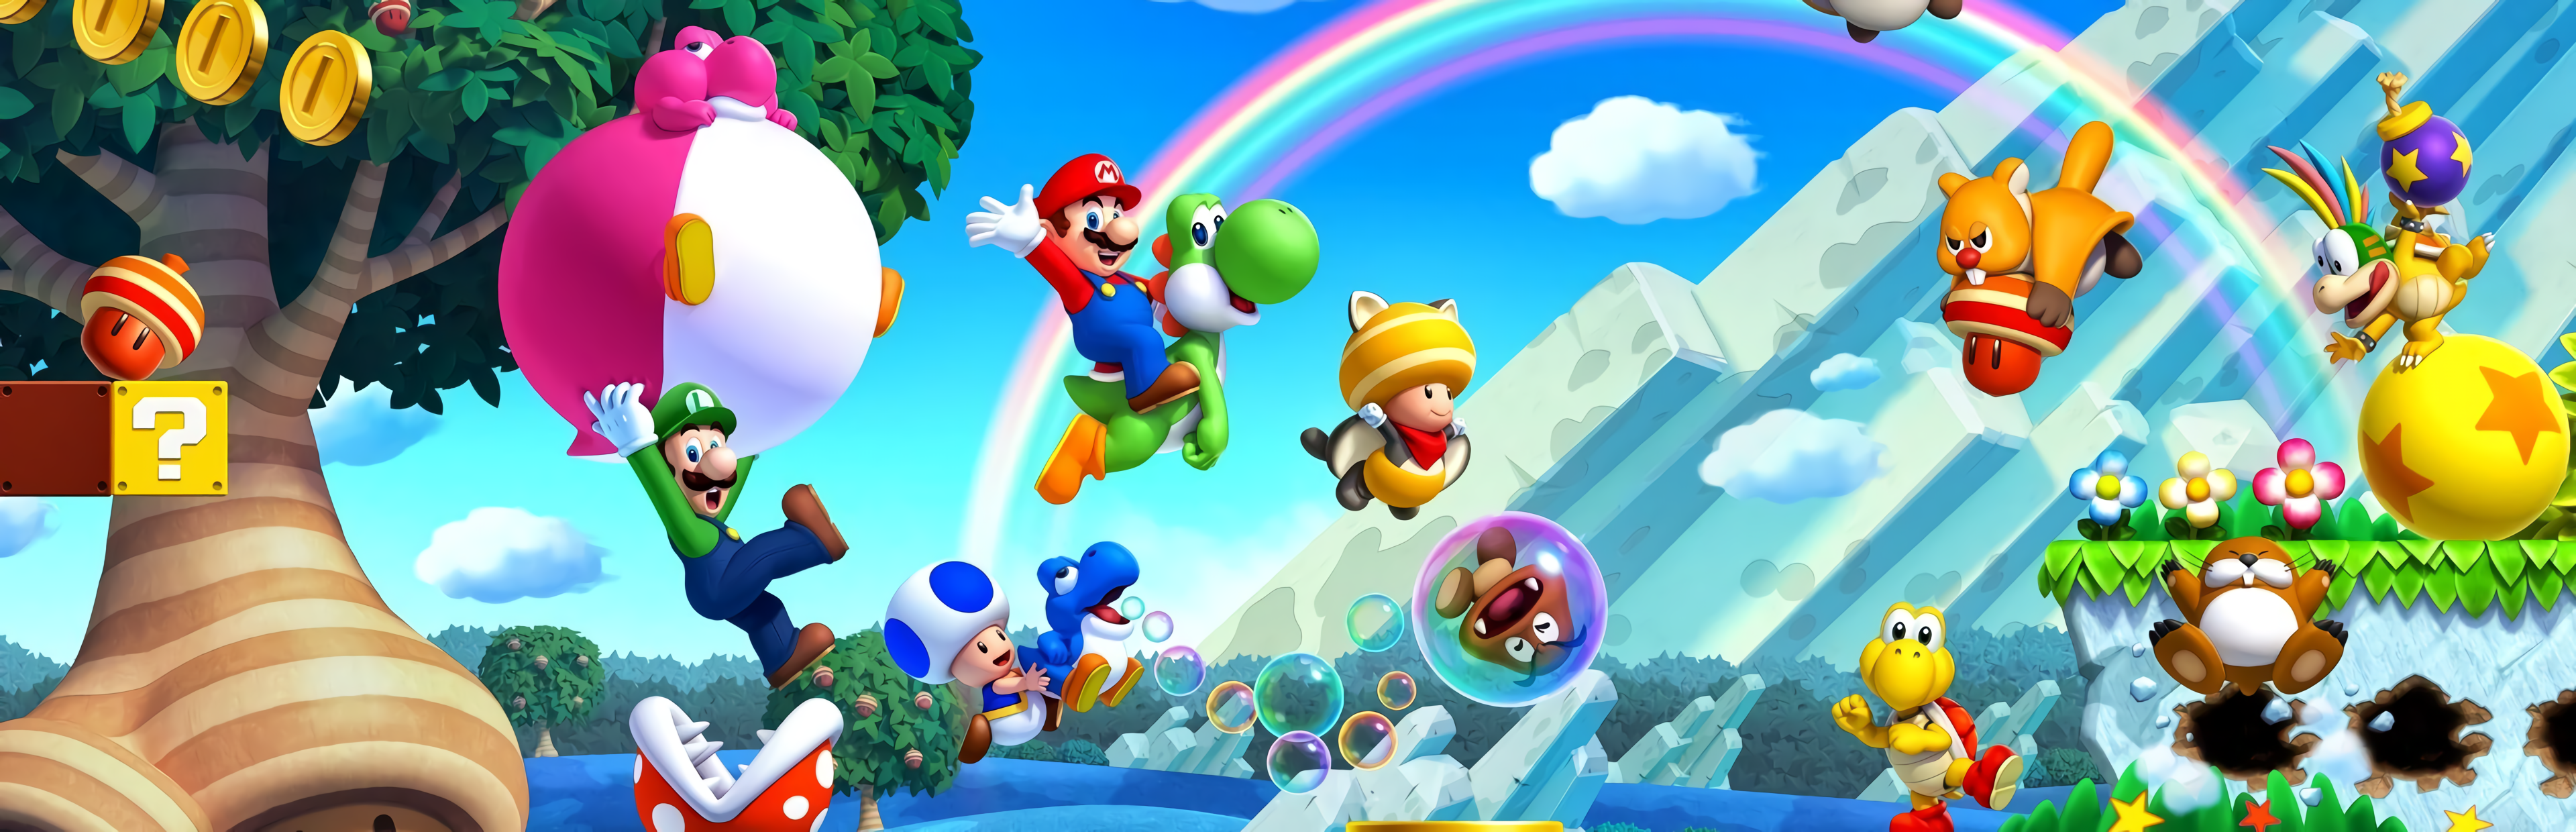 Gamecentral - ** New Arrival ** NSW New Super Mario Bros. U Deluxe